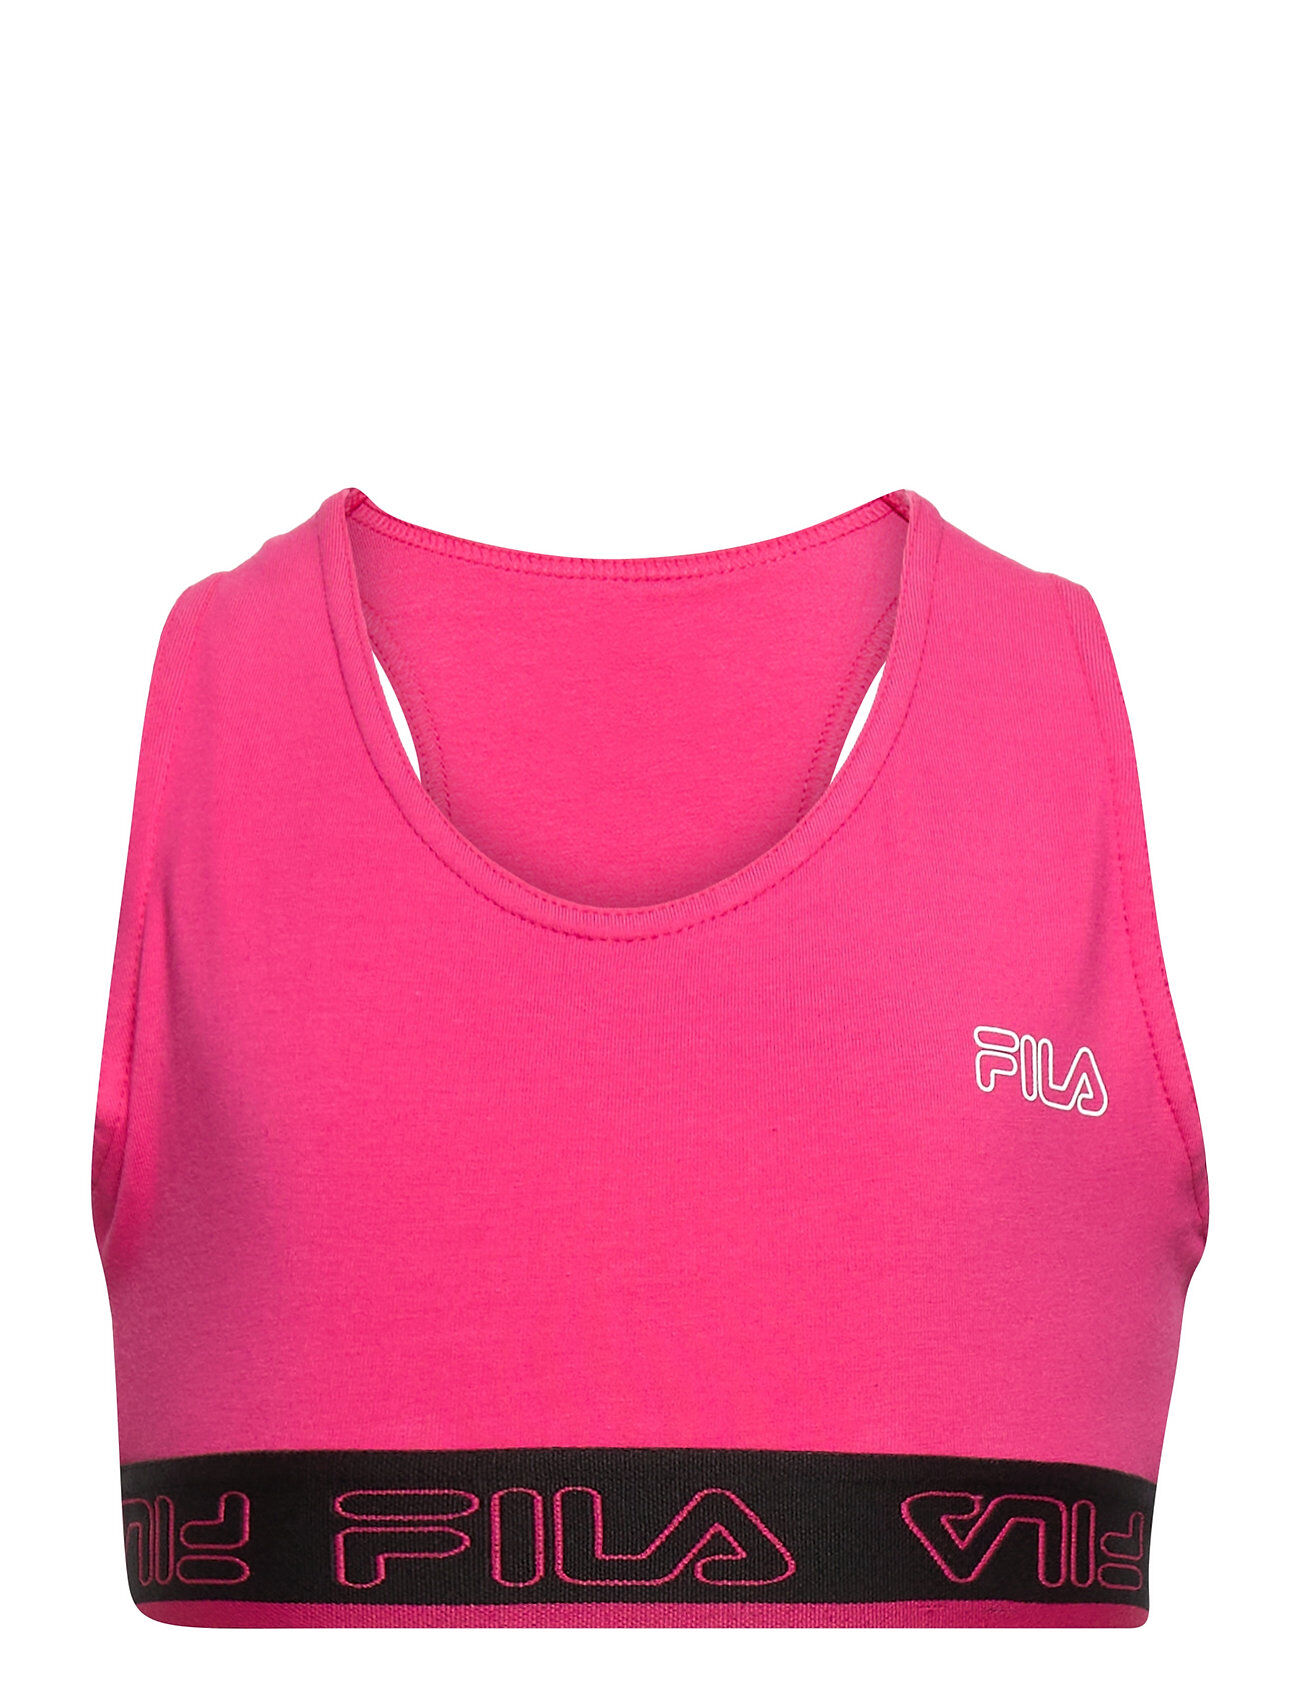 FILA Saba Taped Sport Bra Night & Underwear Underwear Tops Rosa FILA